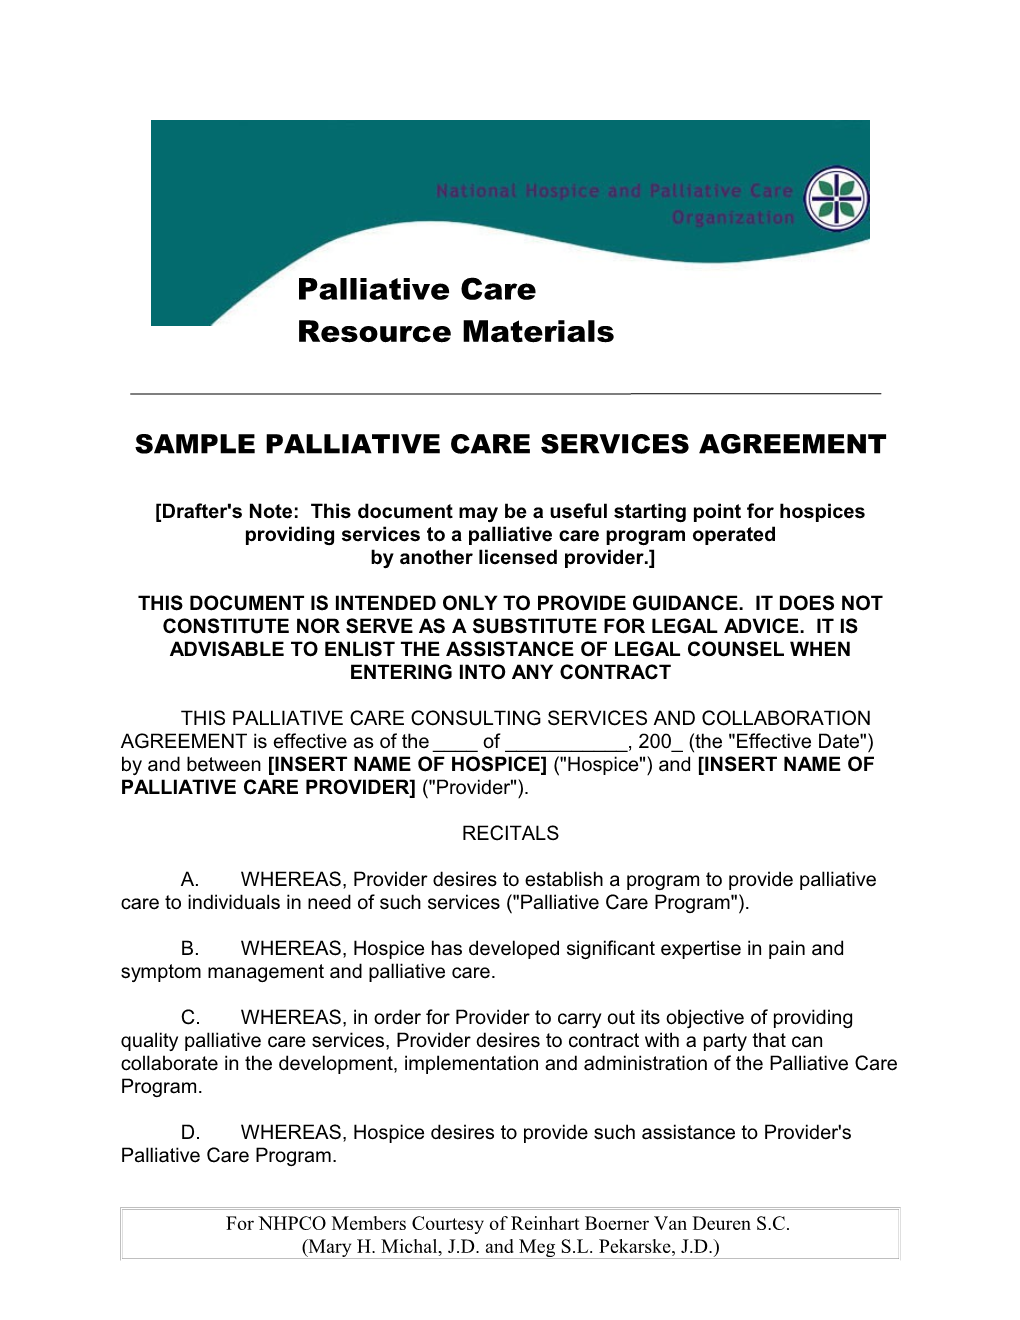 Sample Palliative Care Services Agreement